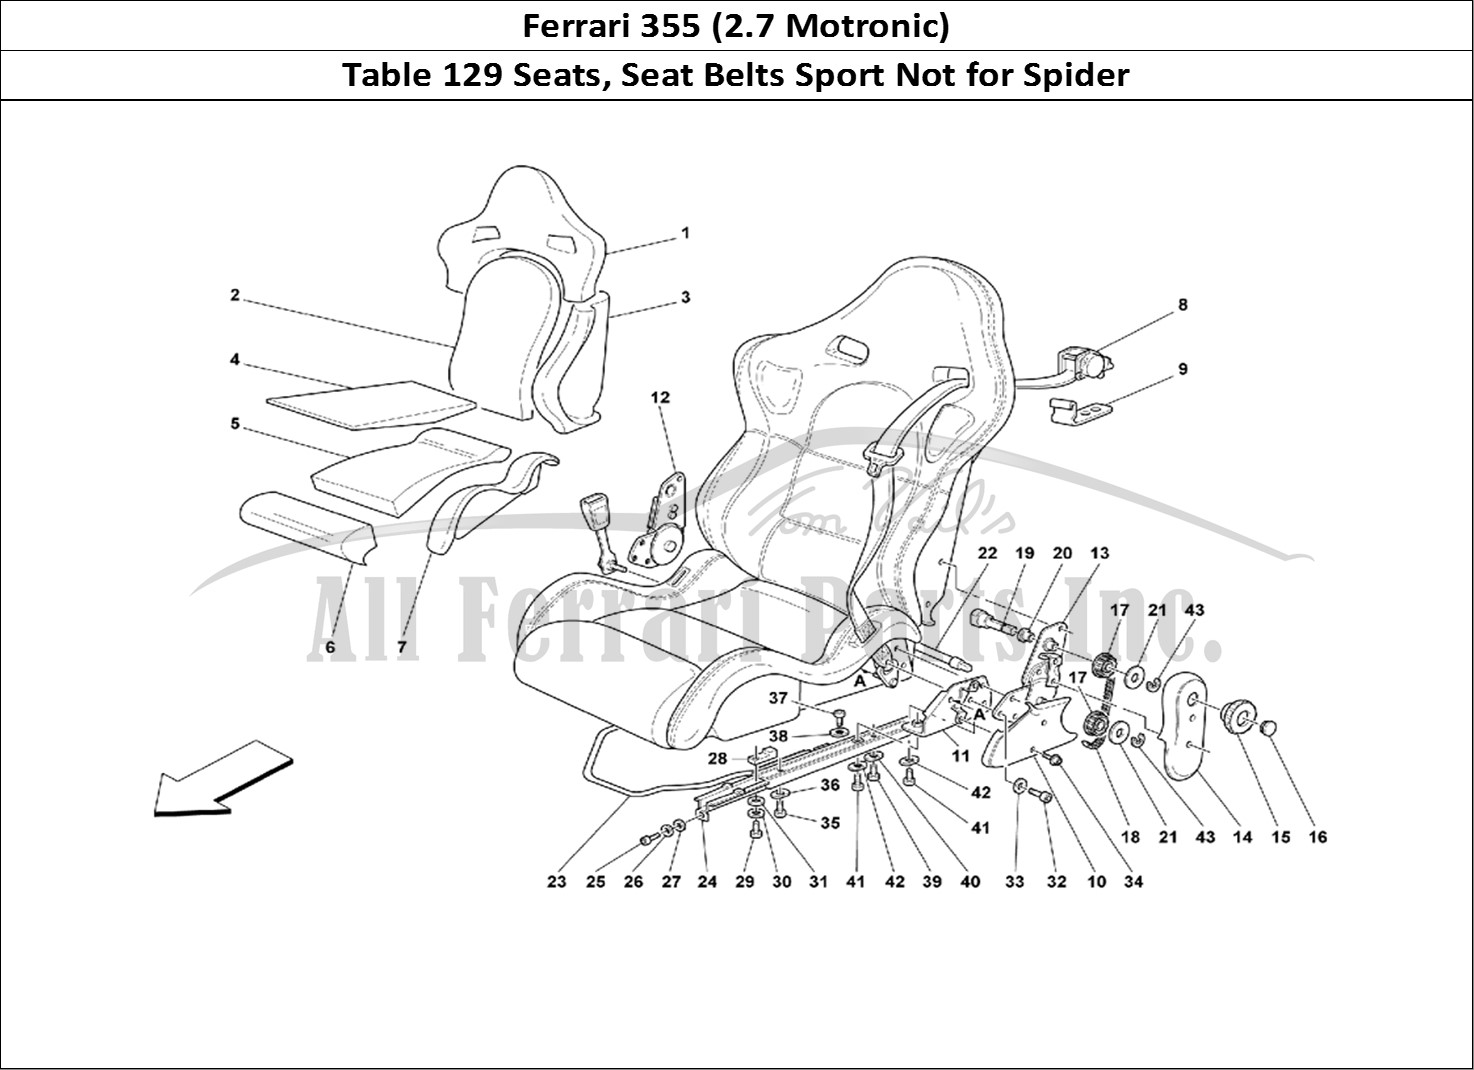 Ferrari Parts Ferrari 355 (2.7 Motronic) Page 129 Seats and Safety Belts -S